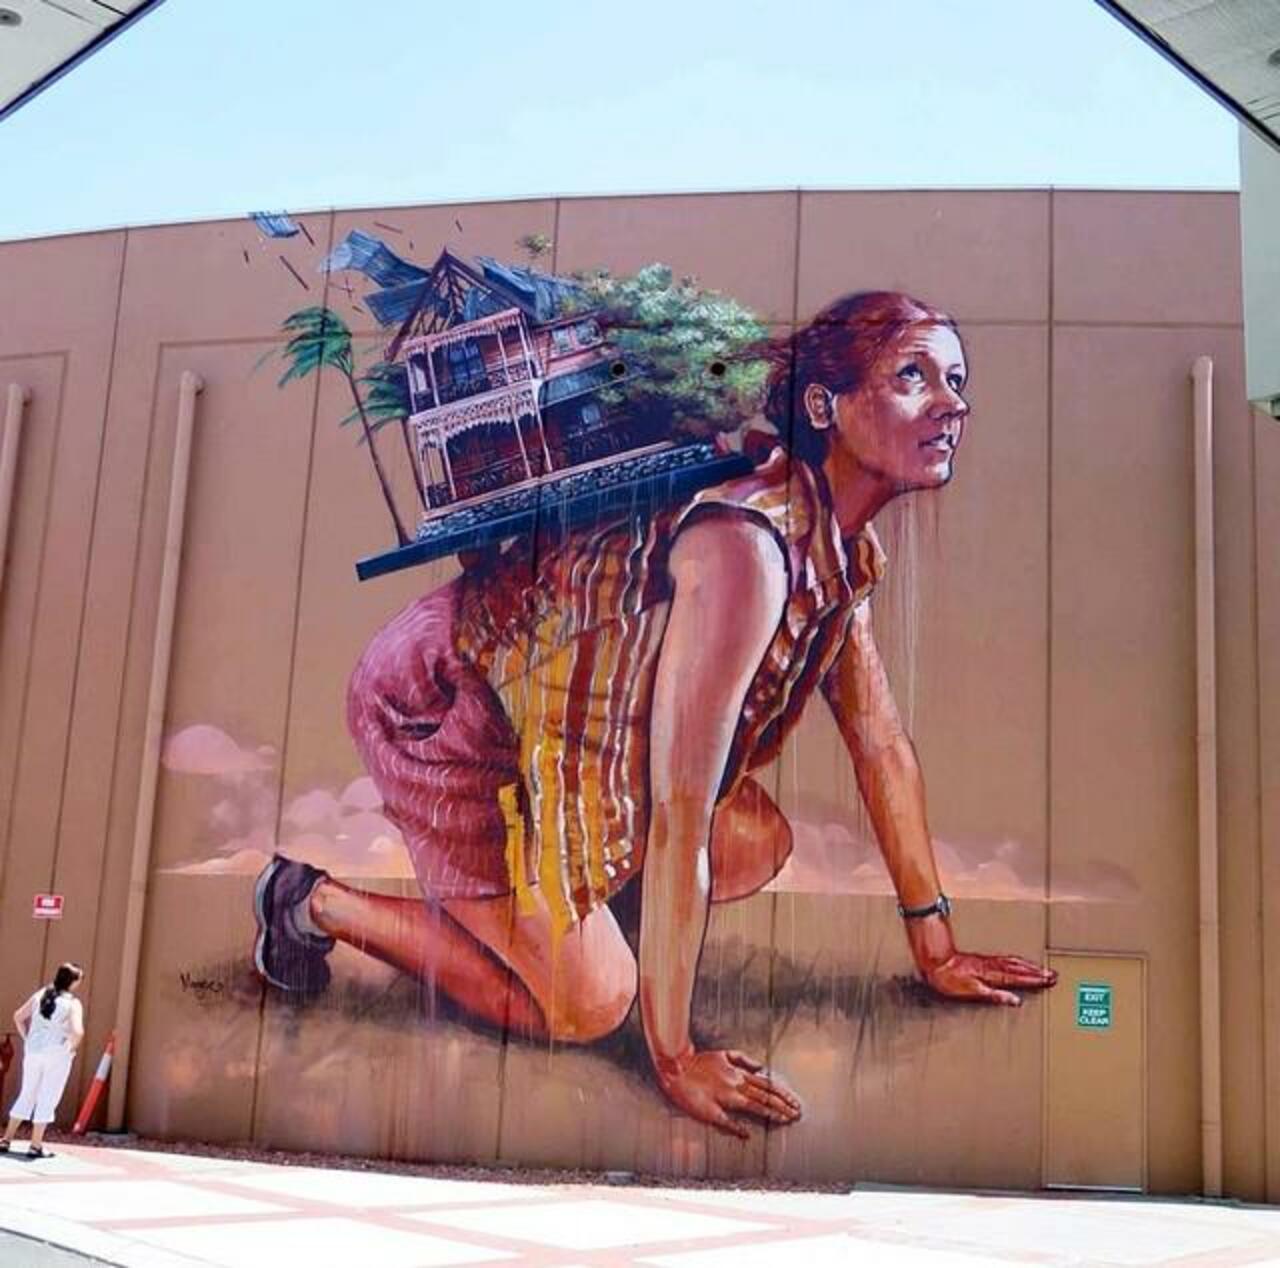 Latest Fintan Magee massive Street Art piece in Bunbury, Western Australia 

#art #graffiti #mural #streetart http://t.co/SdsB02kbyB